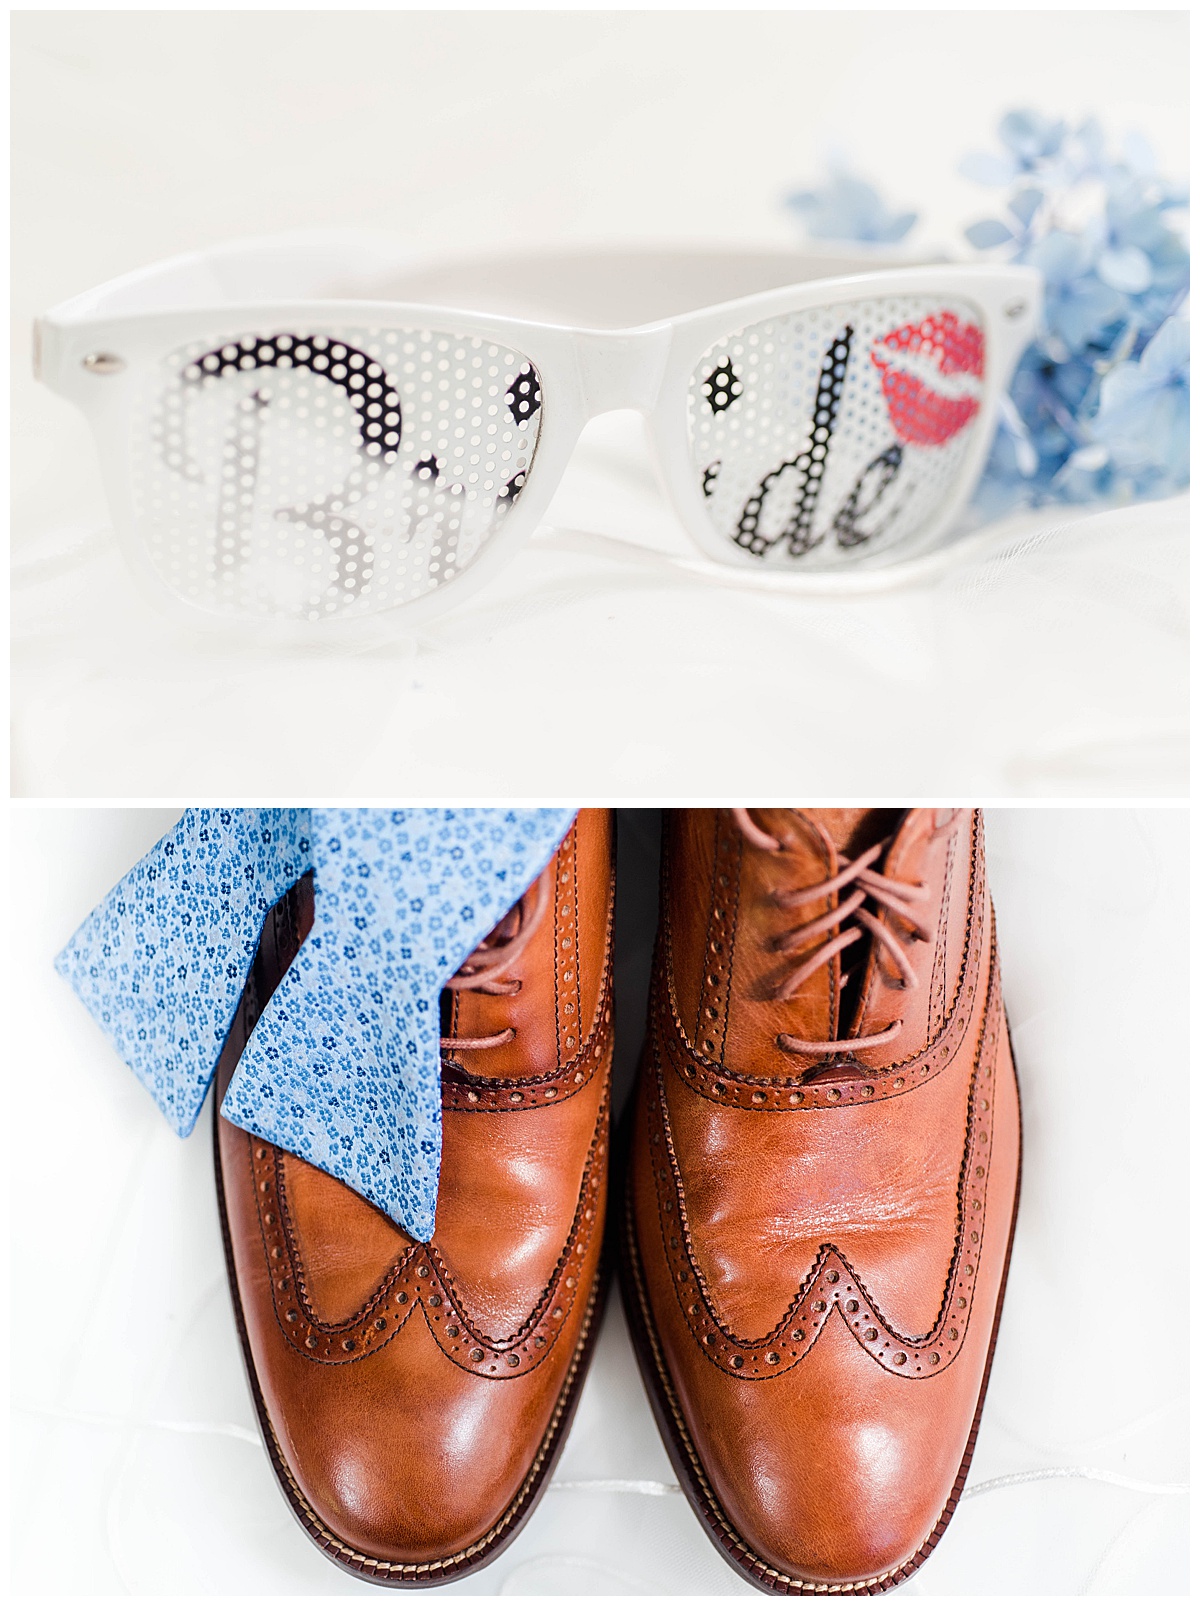 DC Church Wedding: Bride and Groom wedding details, shoes, tie, sunglasses